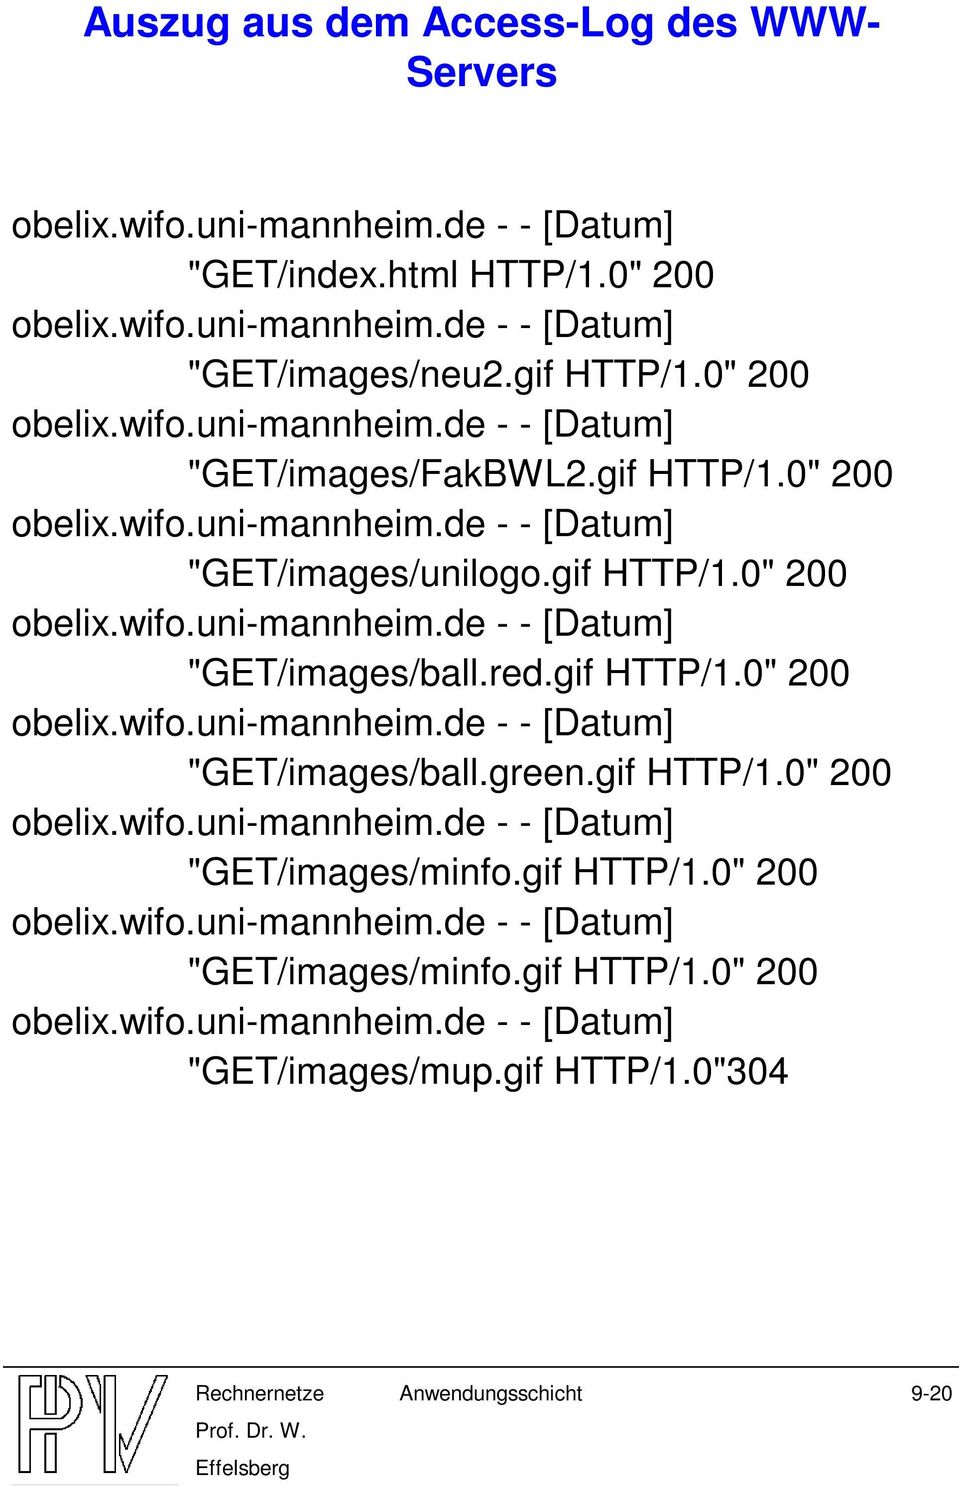 red.gif HTTP/1.0" 200 obelix.wifo.uni-mannheim.de - - [Datum] "GET/images/ball.green.gif HTTP/1.0" 200 obelix.wifo.uni-mannheim.de - - [Datum] "GET/images/minfo.gif HTTP/1.0" 200 obelix.wifo.uni-mannheim.de - - [Datum] "GET/images/minfo.gif HTTP/1.0" 200 obelix.wifo.uni-mannheim.de - - [Datum] "GET/images/mup.